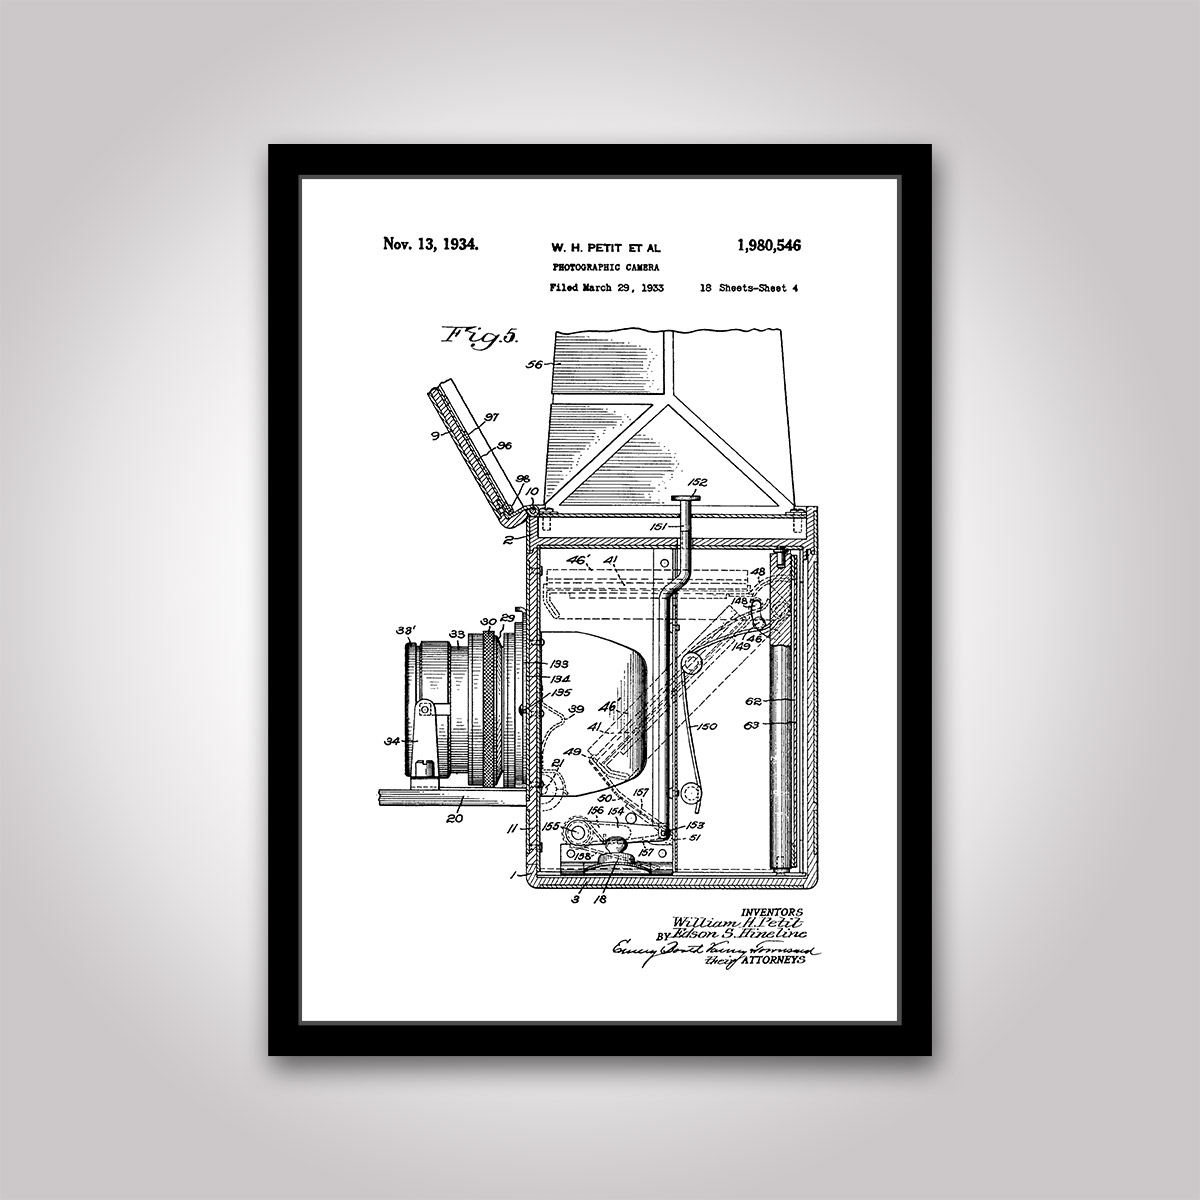 Photographic Camera patent poster